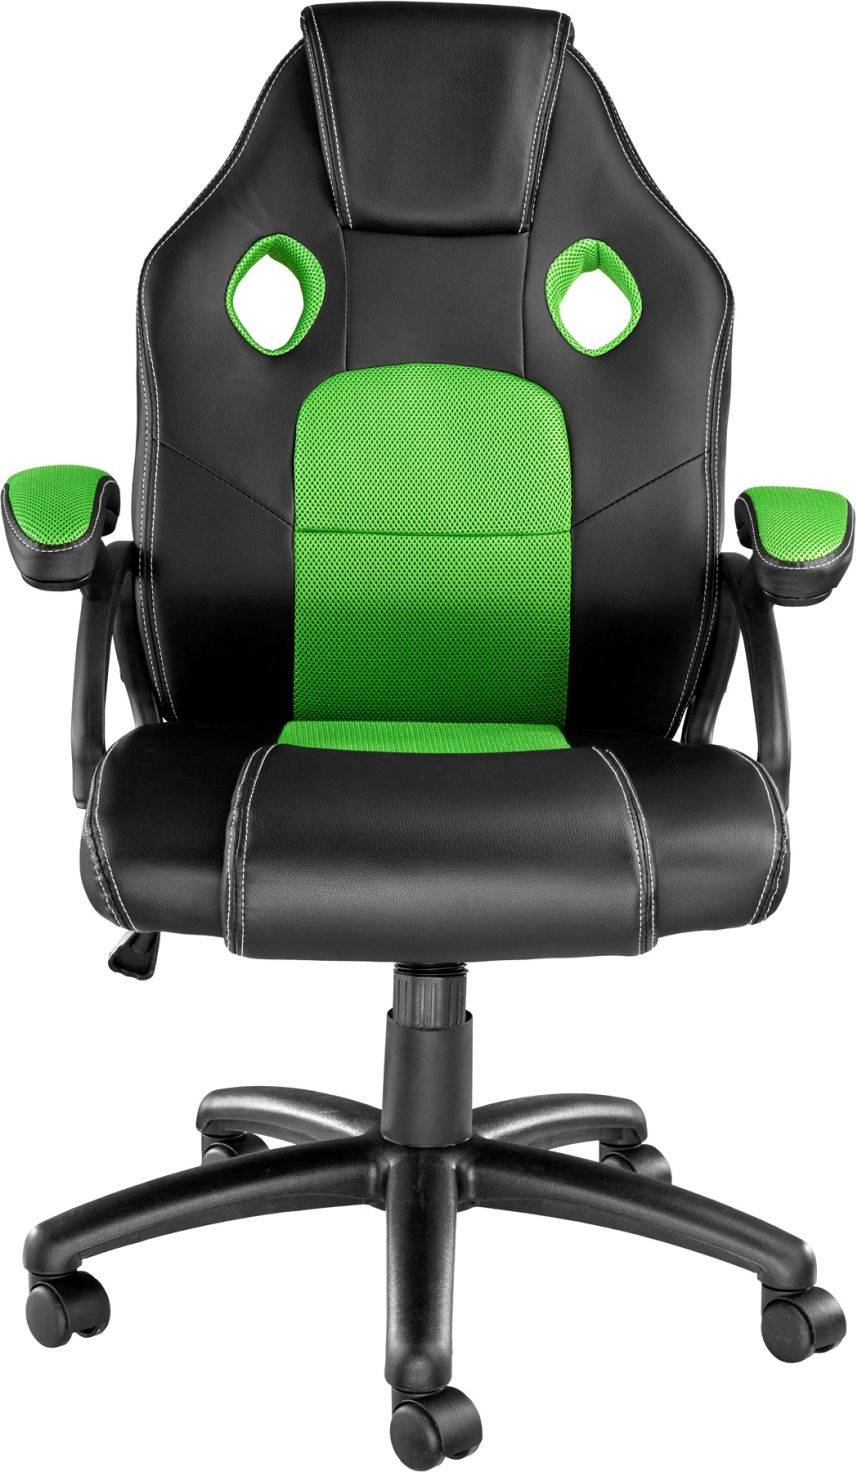  Bild på tectake Mike Gaming Chair - Black/Green gamingstol